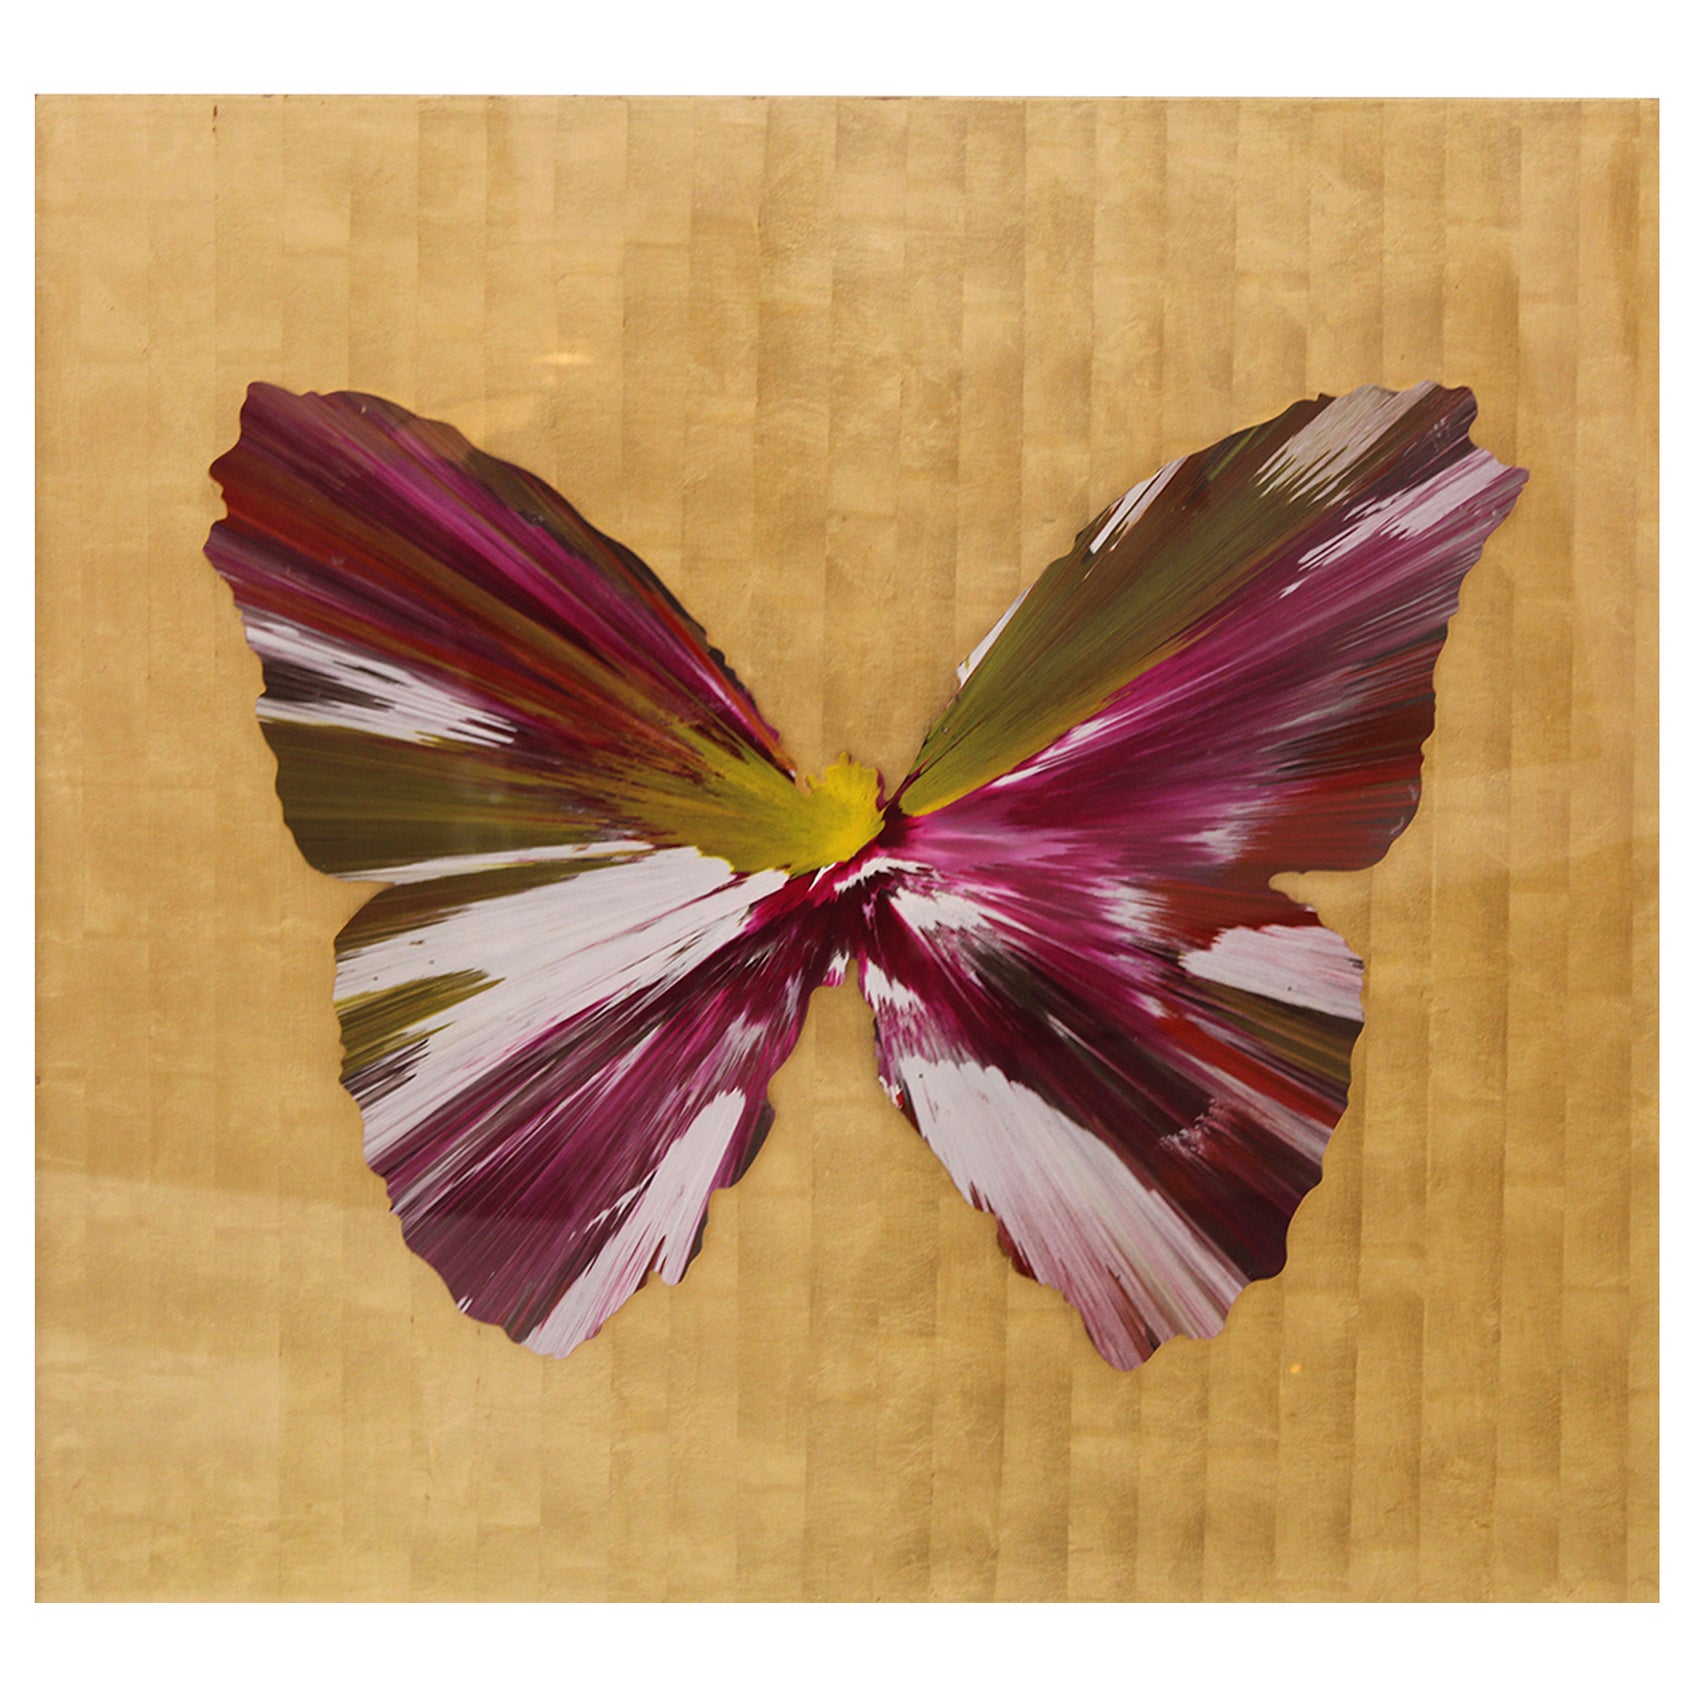  Butterfly Spin Painting 2009 Framed on 18k Gold Leaf, Damien Hirst, Artwork